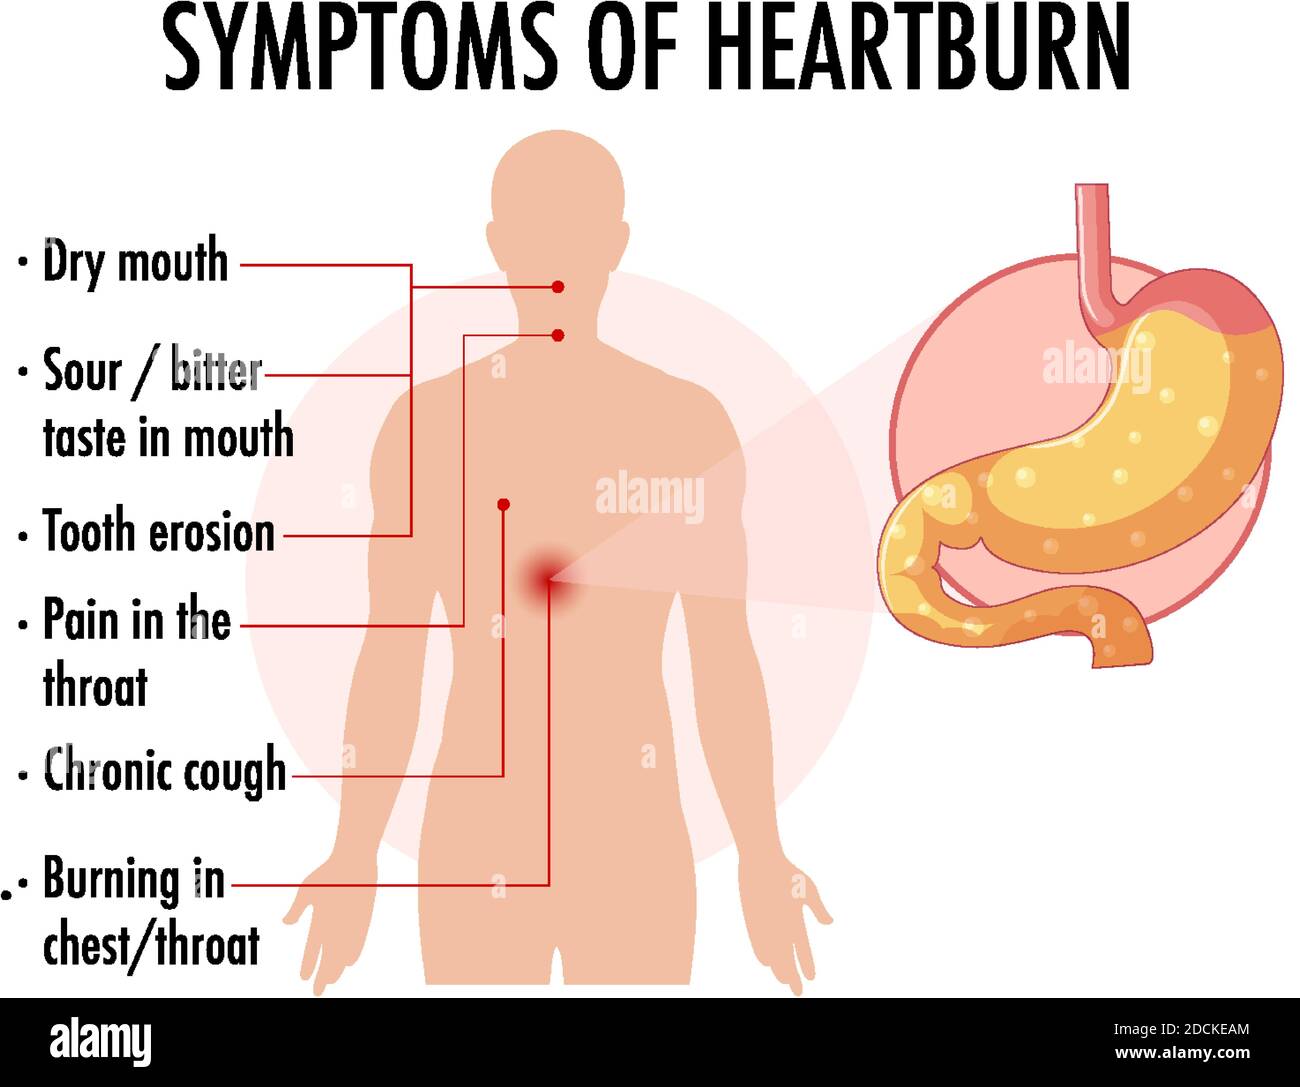 Symptoms of heartburn information infographic illustration Stock Vector